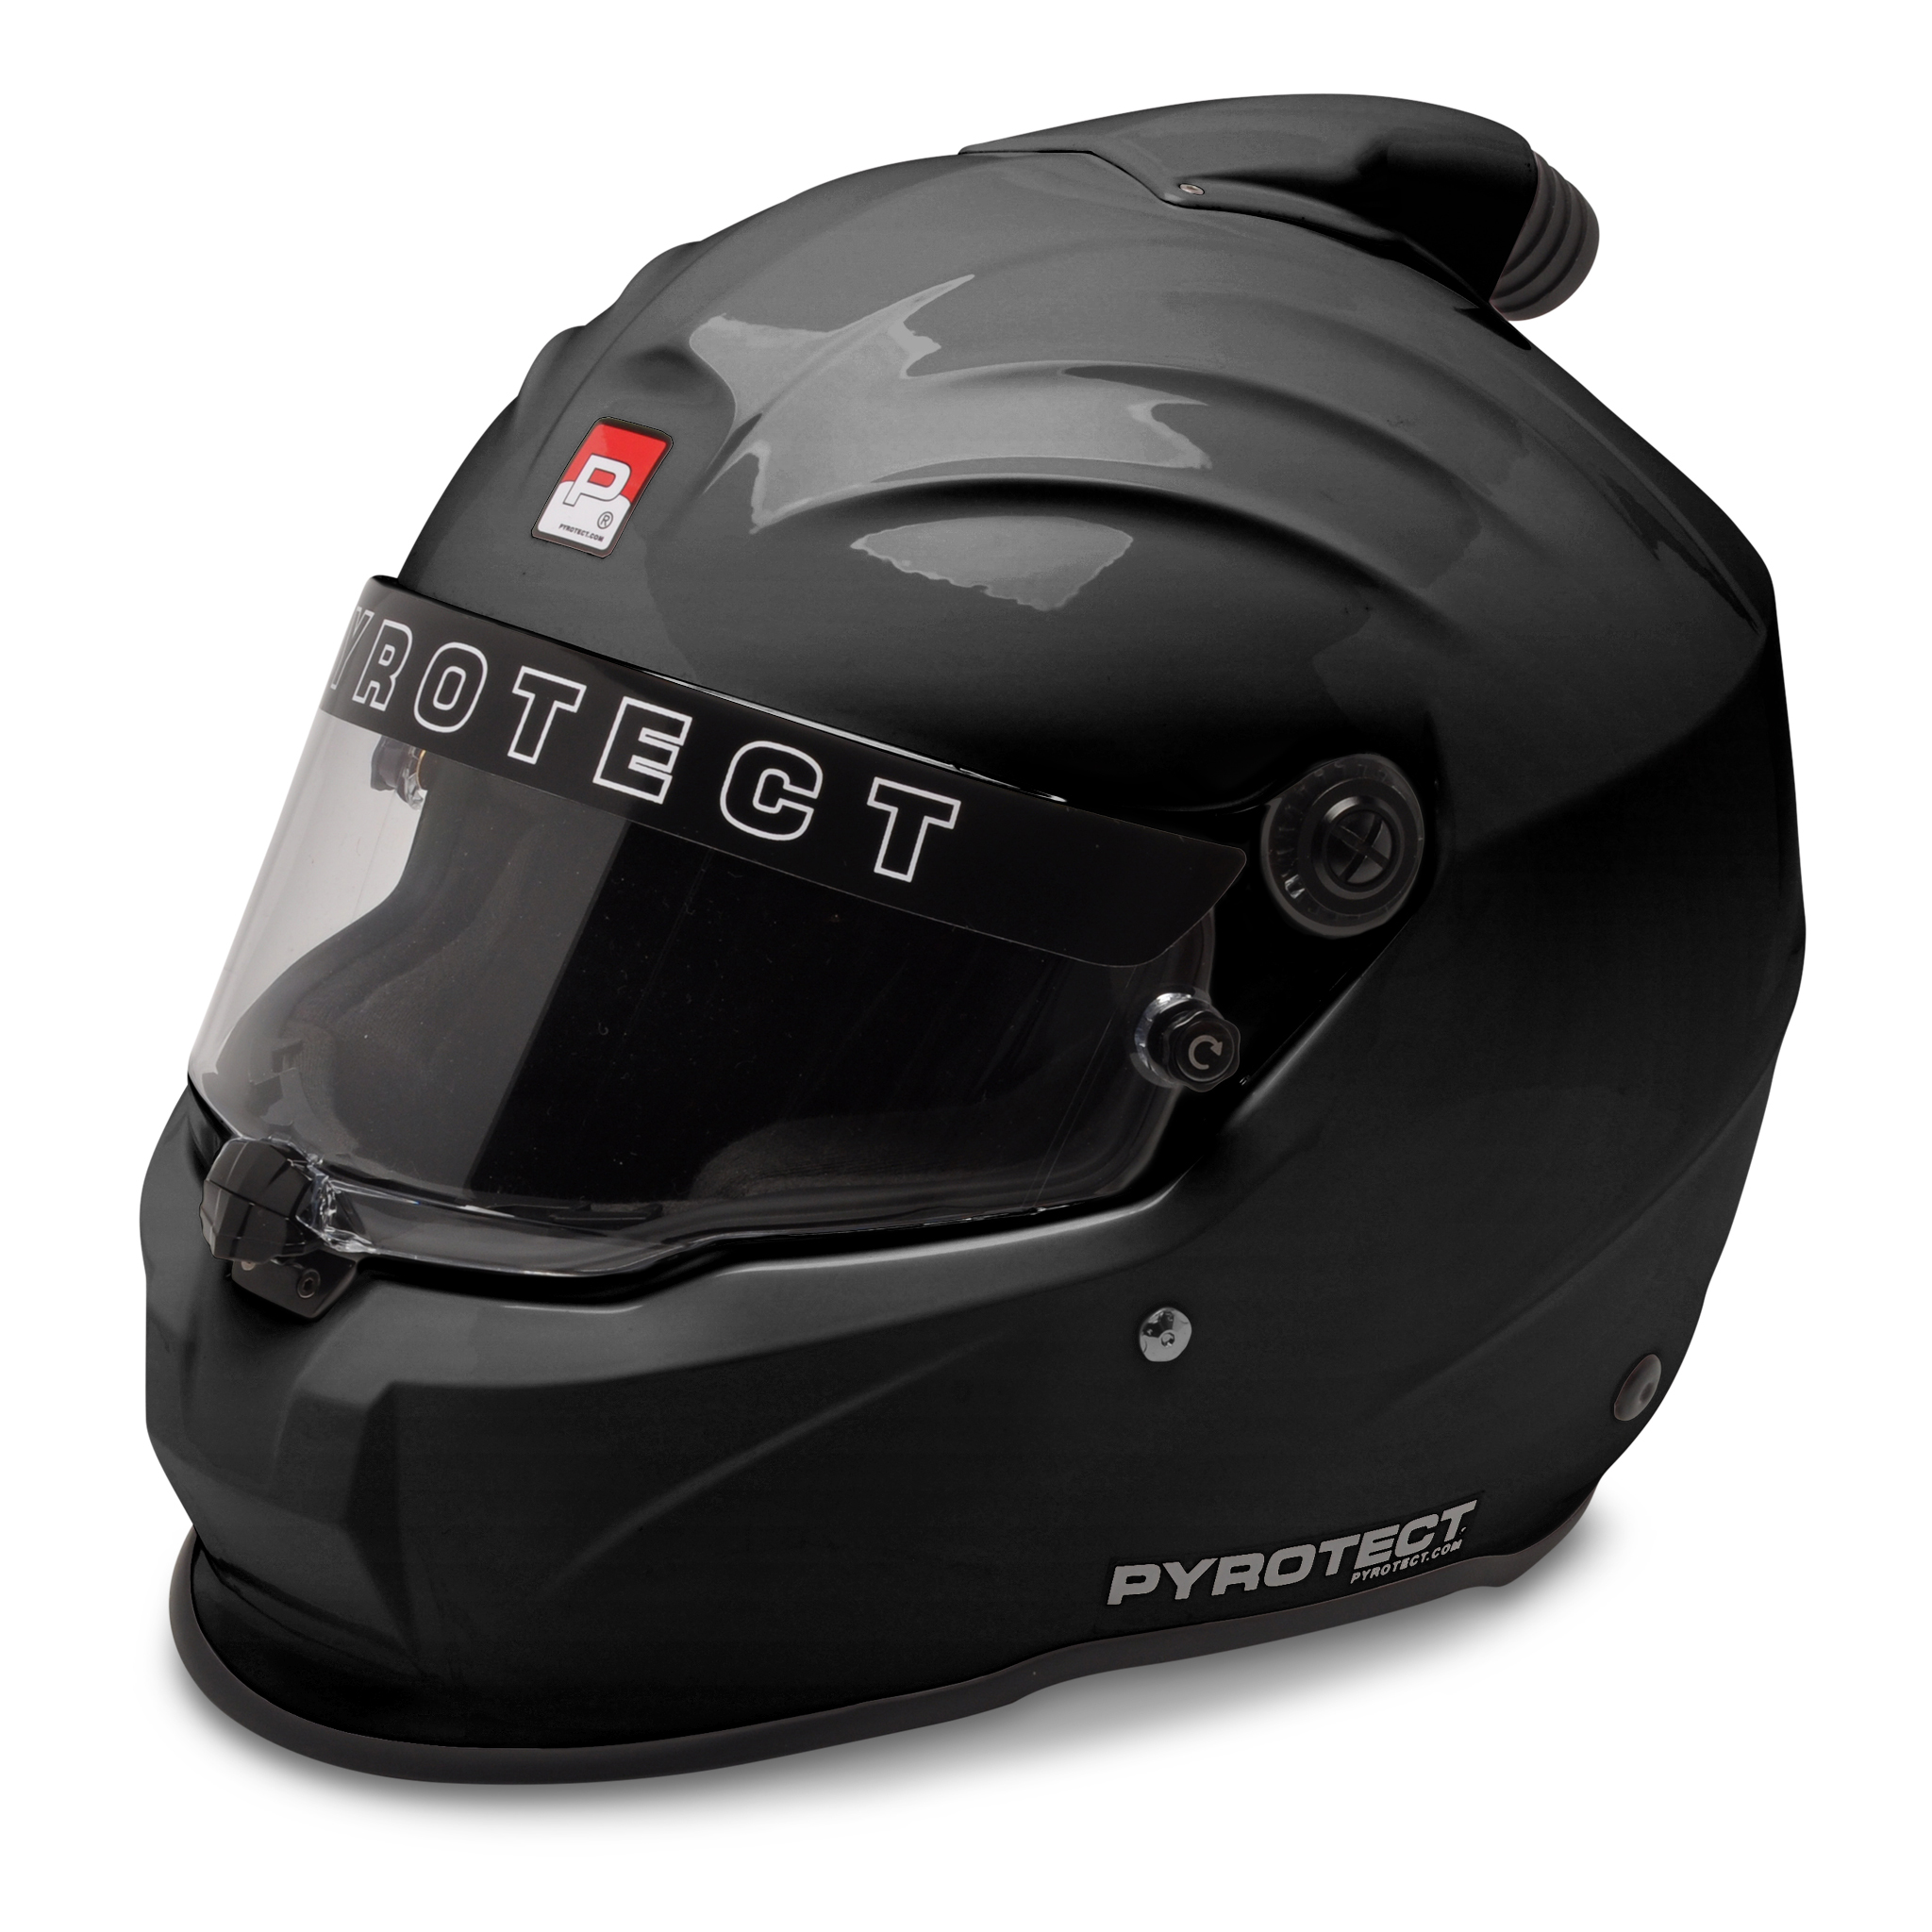 PYROTECT 安心の定価販売 Helmet Pro Small Flat Black Top Air HB821220 D SA2020 B 入園入学祝い